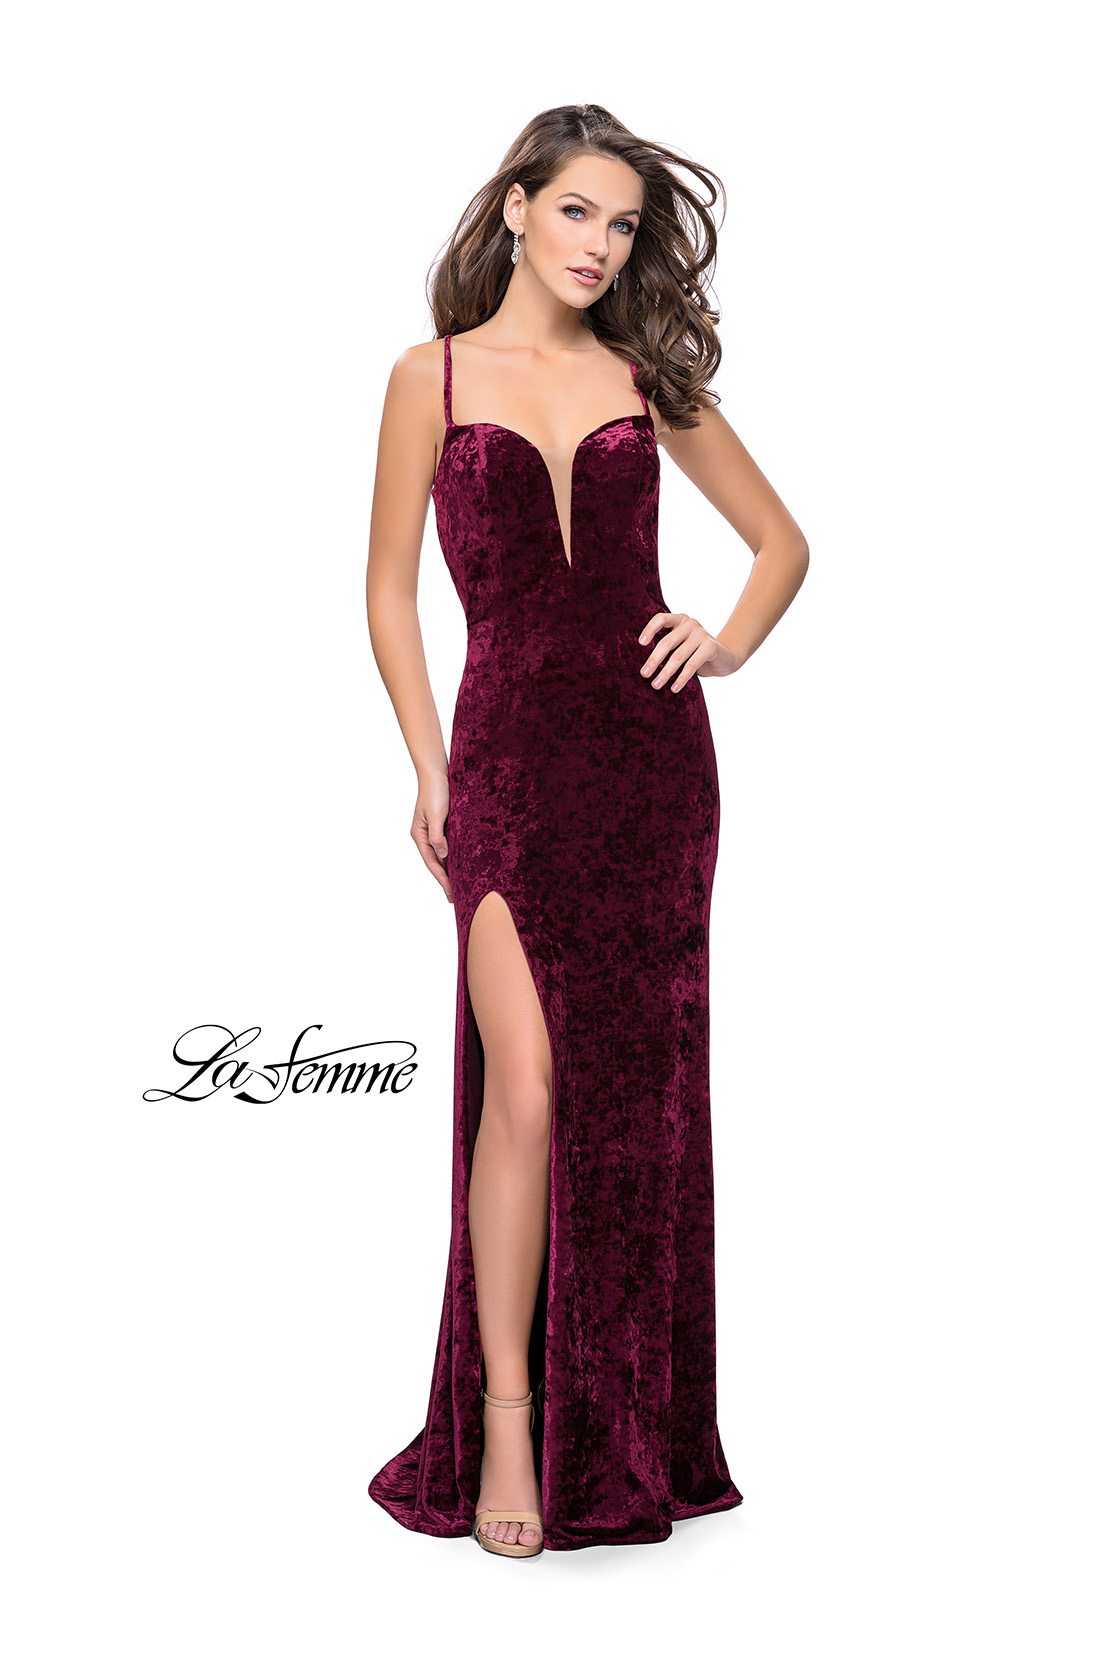 Crushed Velvet Prom Dress in Wine by La Femme Style 25659